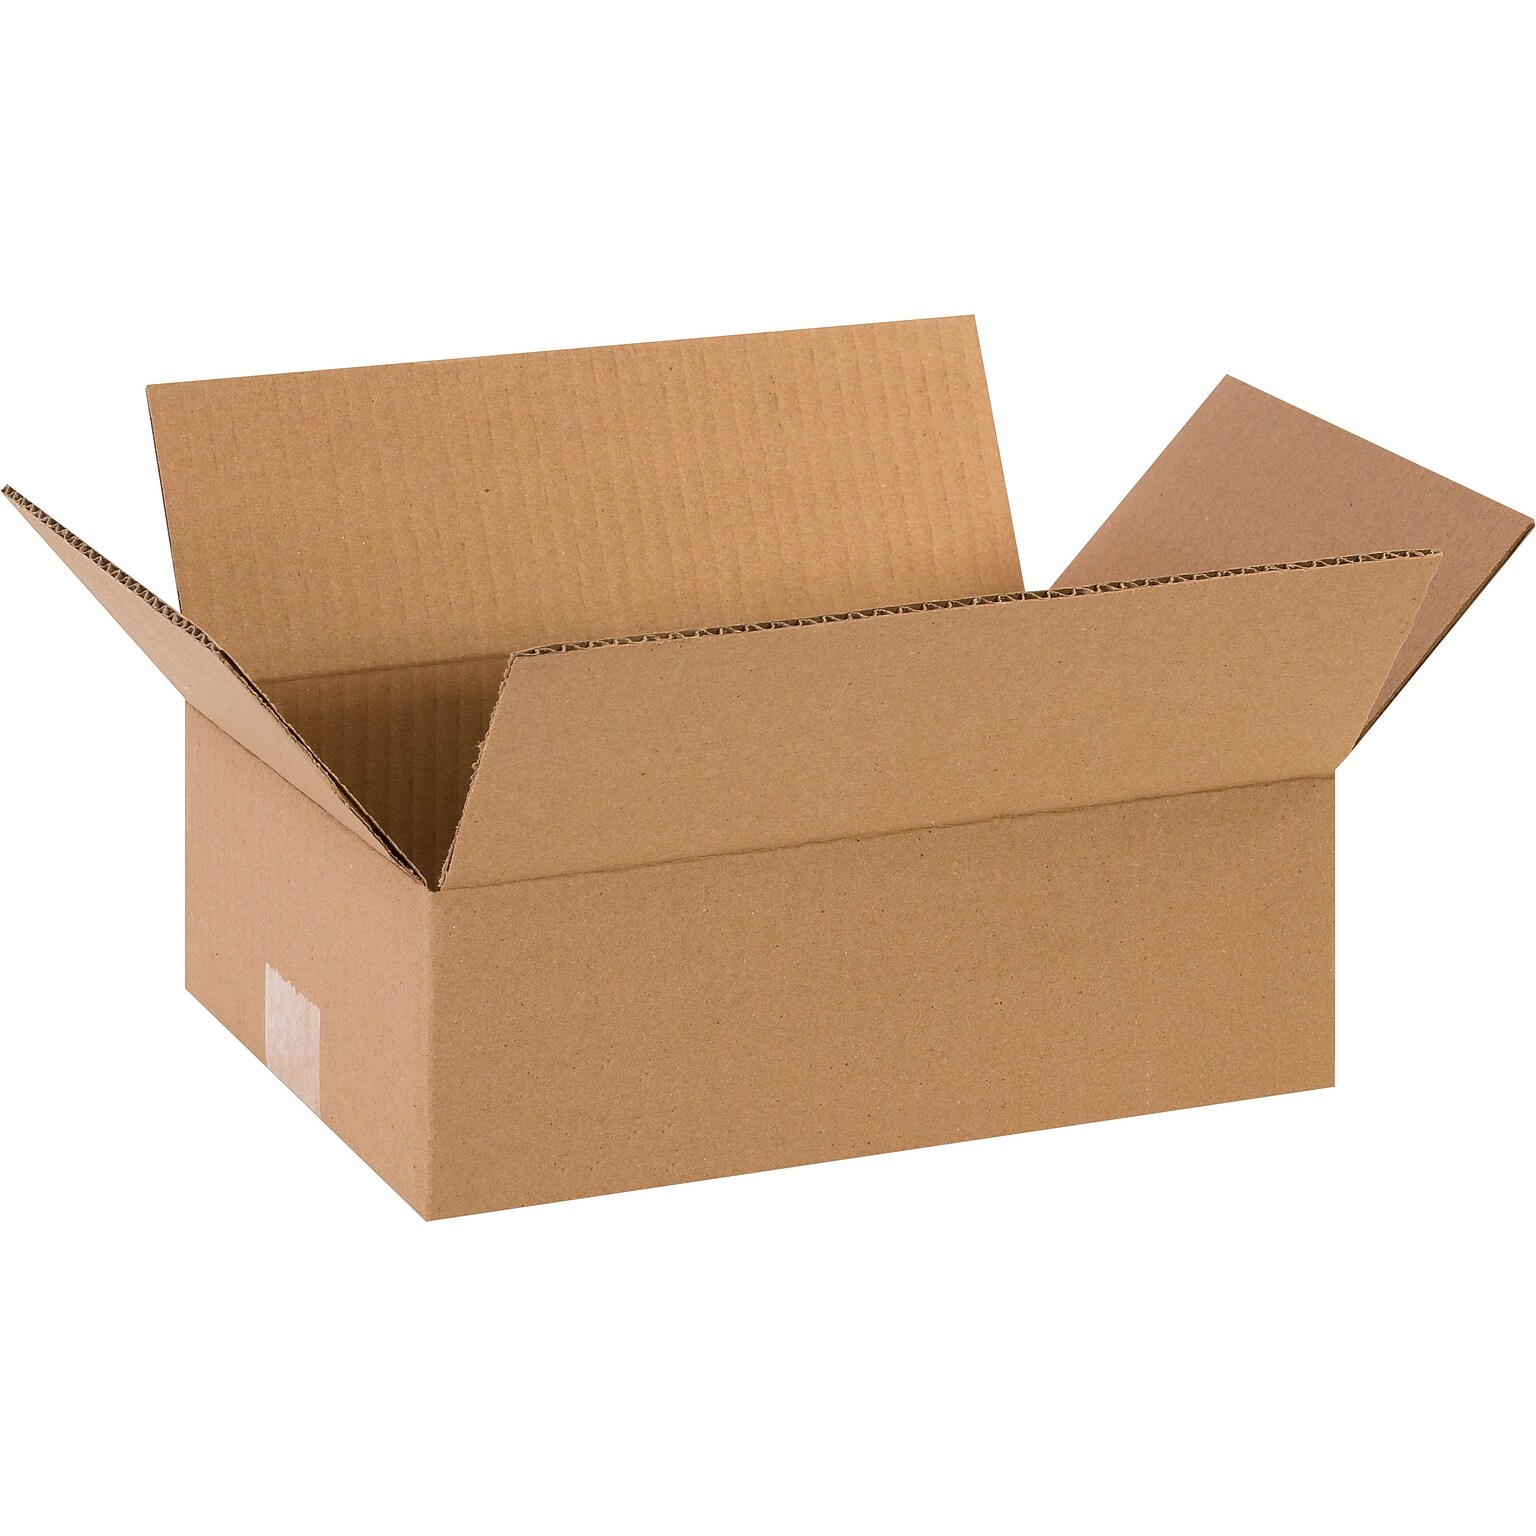 12 x 8 x 4 Shipping Boxes, 32 ECT, Brown, 25/Bundle (1284)